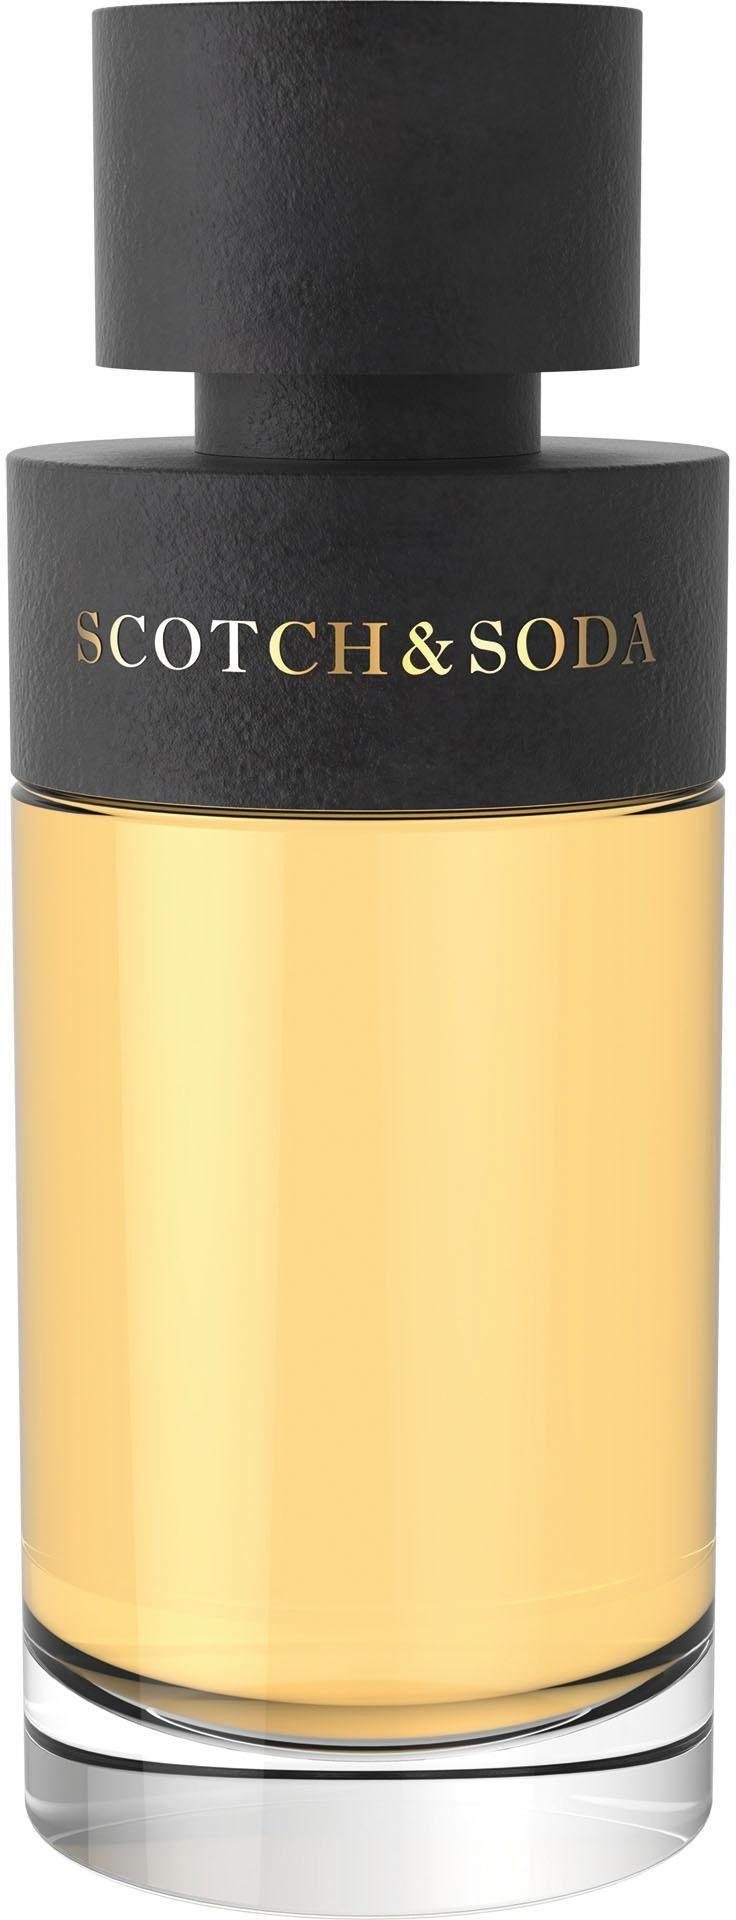 Scotch & Soda de Toilette Men Eau